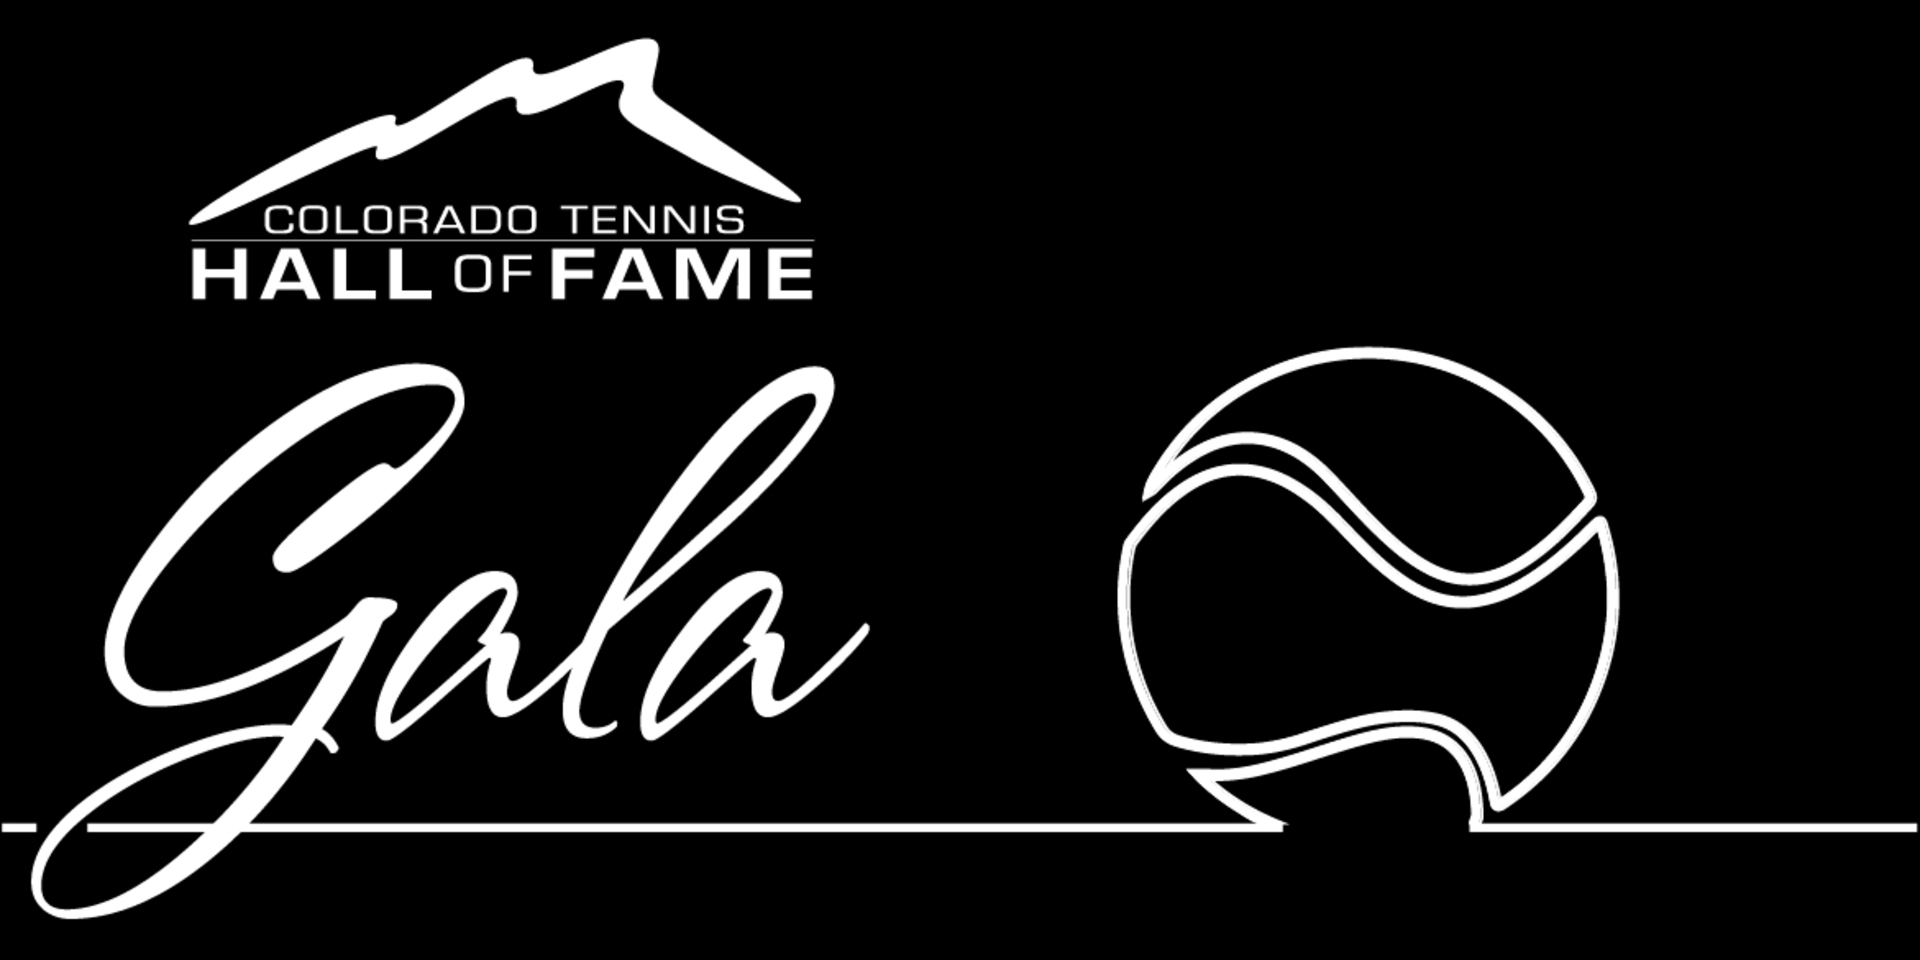  Colorado Tennis Hall of Fame Gala 